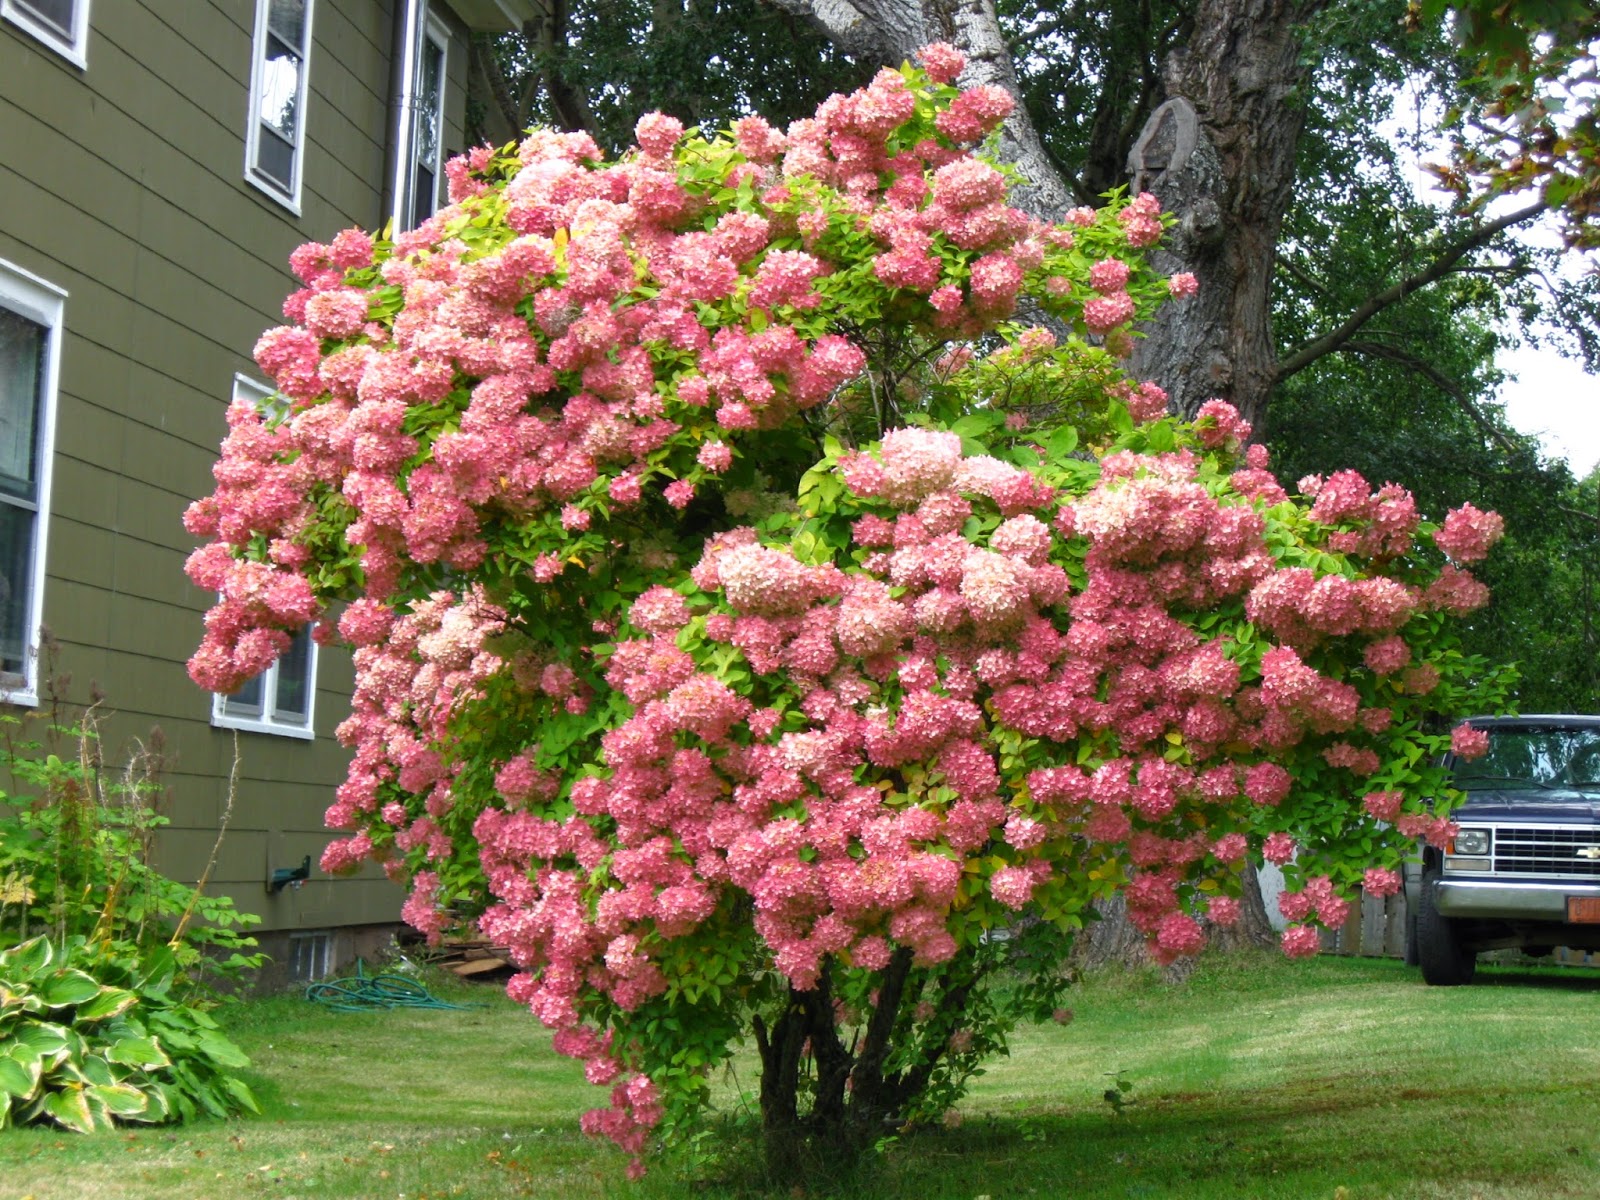 Garden Dream: Marvelous Hydrangeas Bloom All Summer and Fall